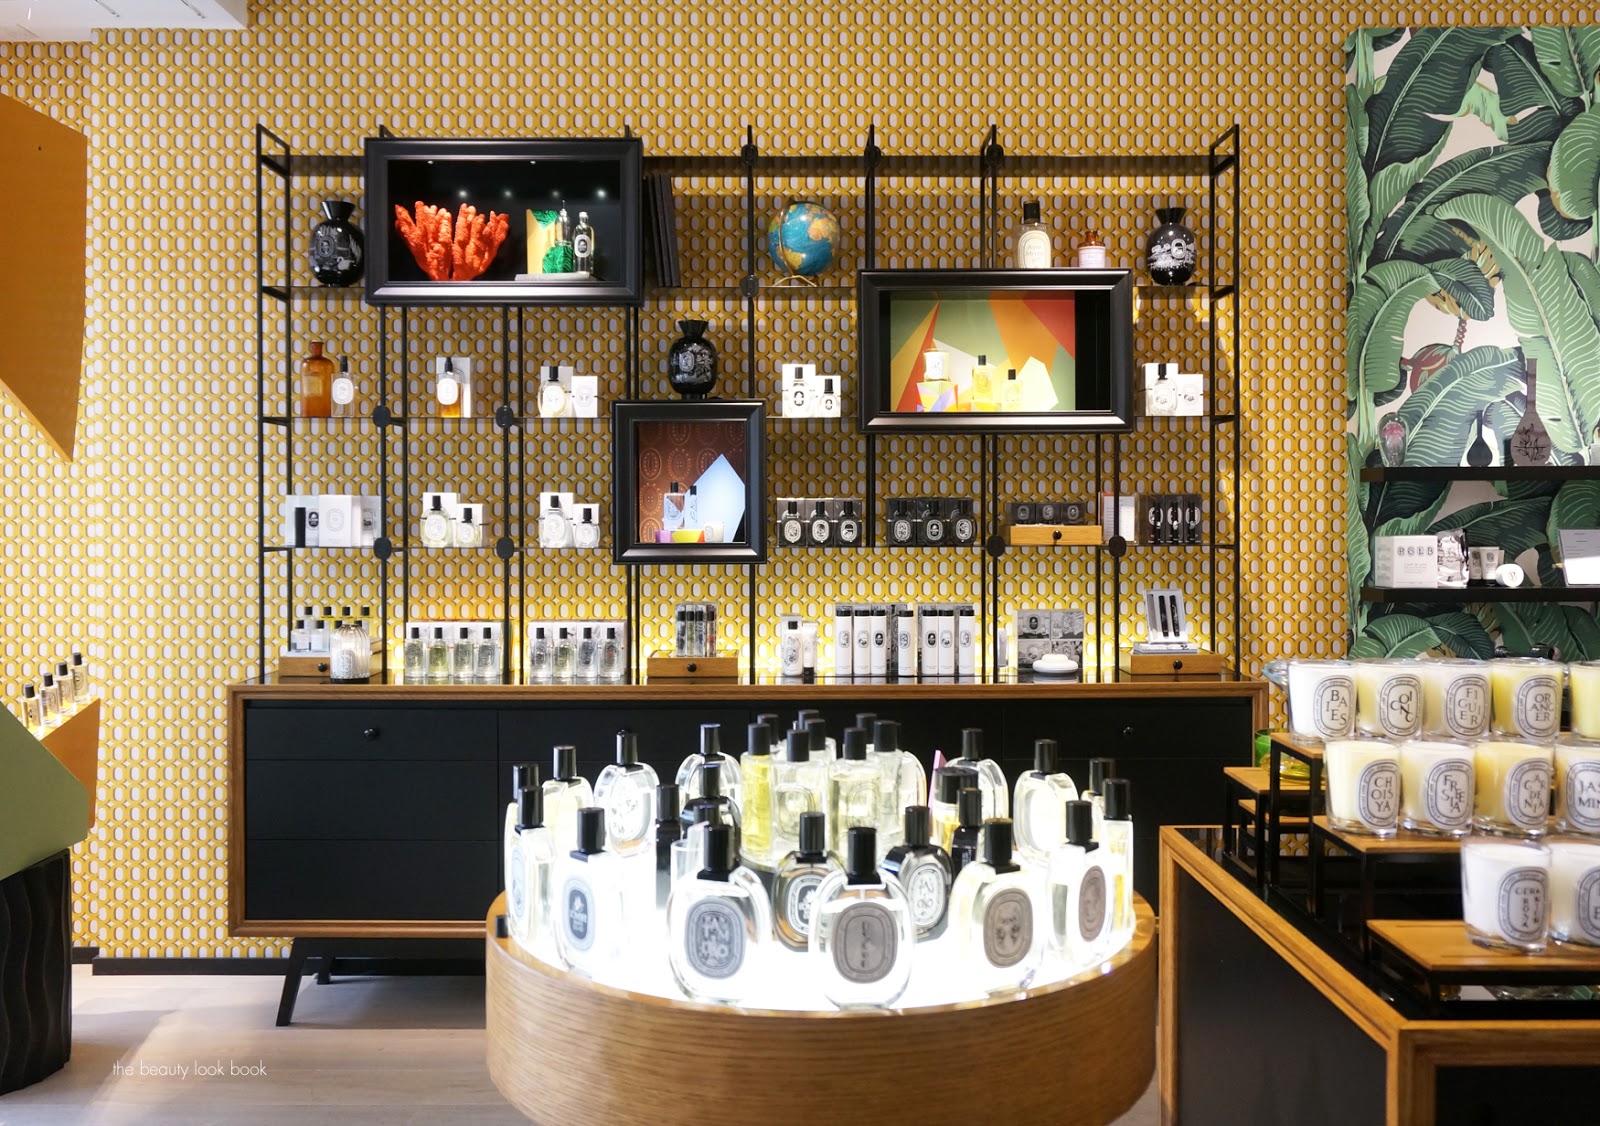 Visit Louis Vuitton's Pop-Up at South Coast Plaza - Orange Coast Mag